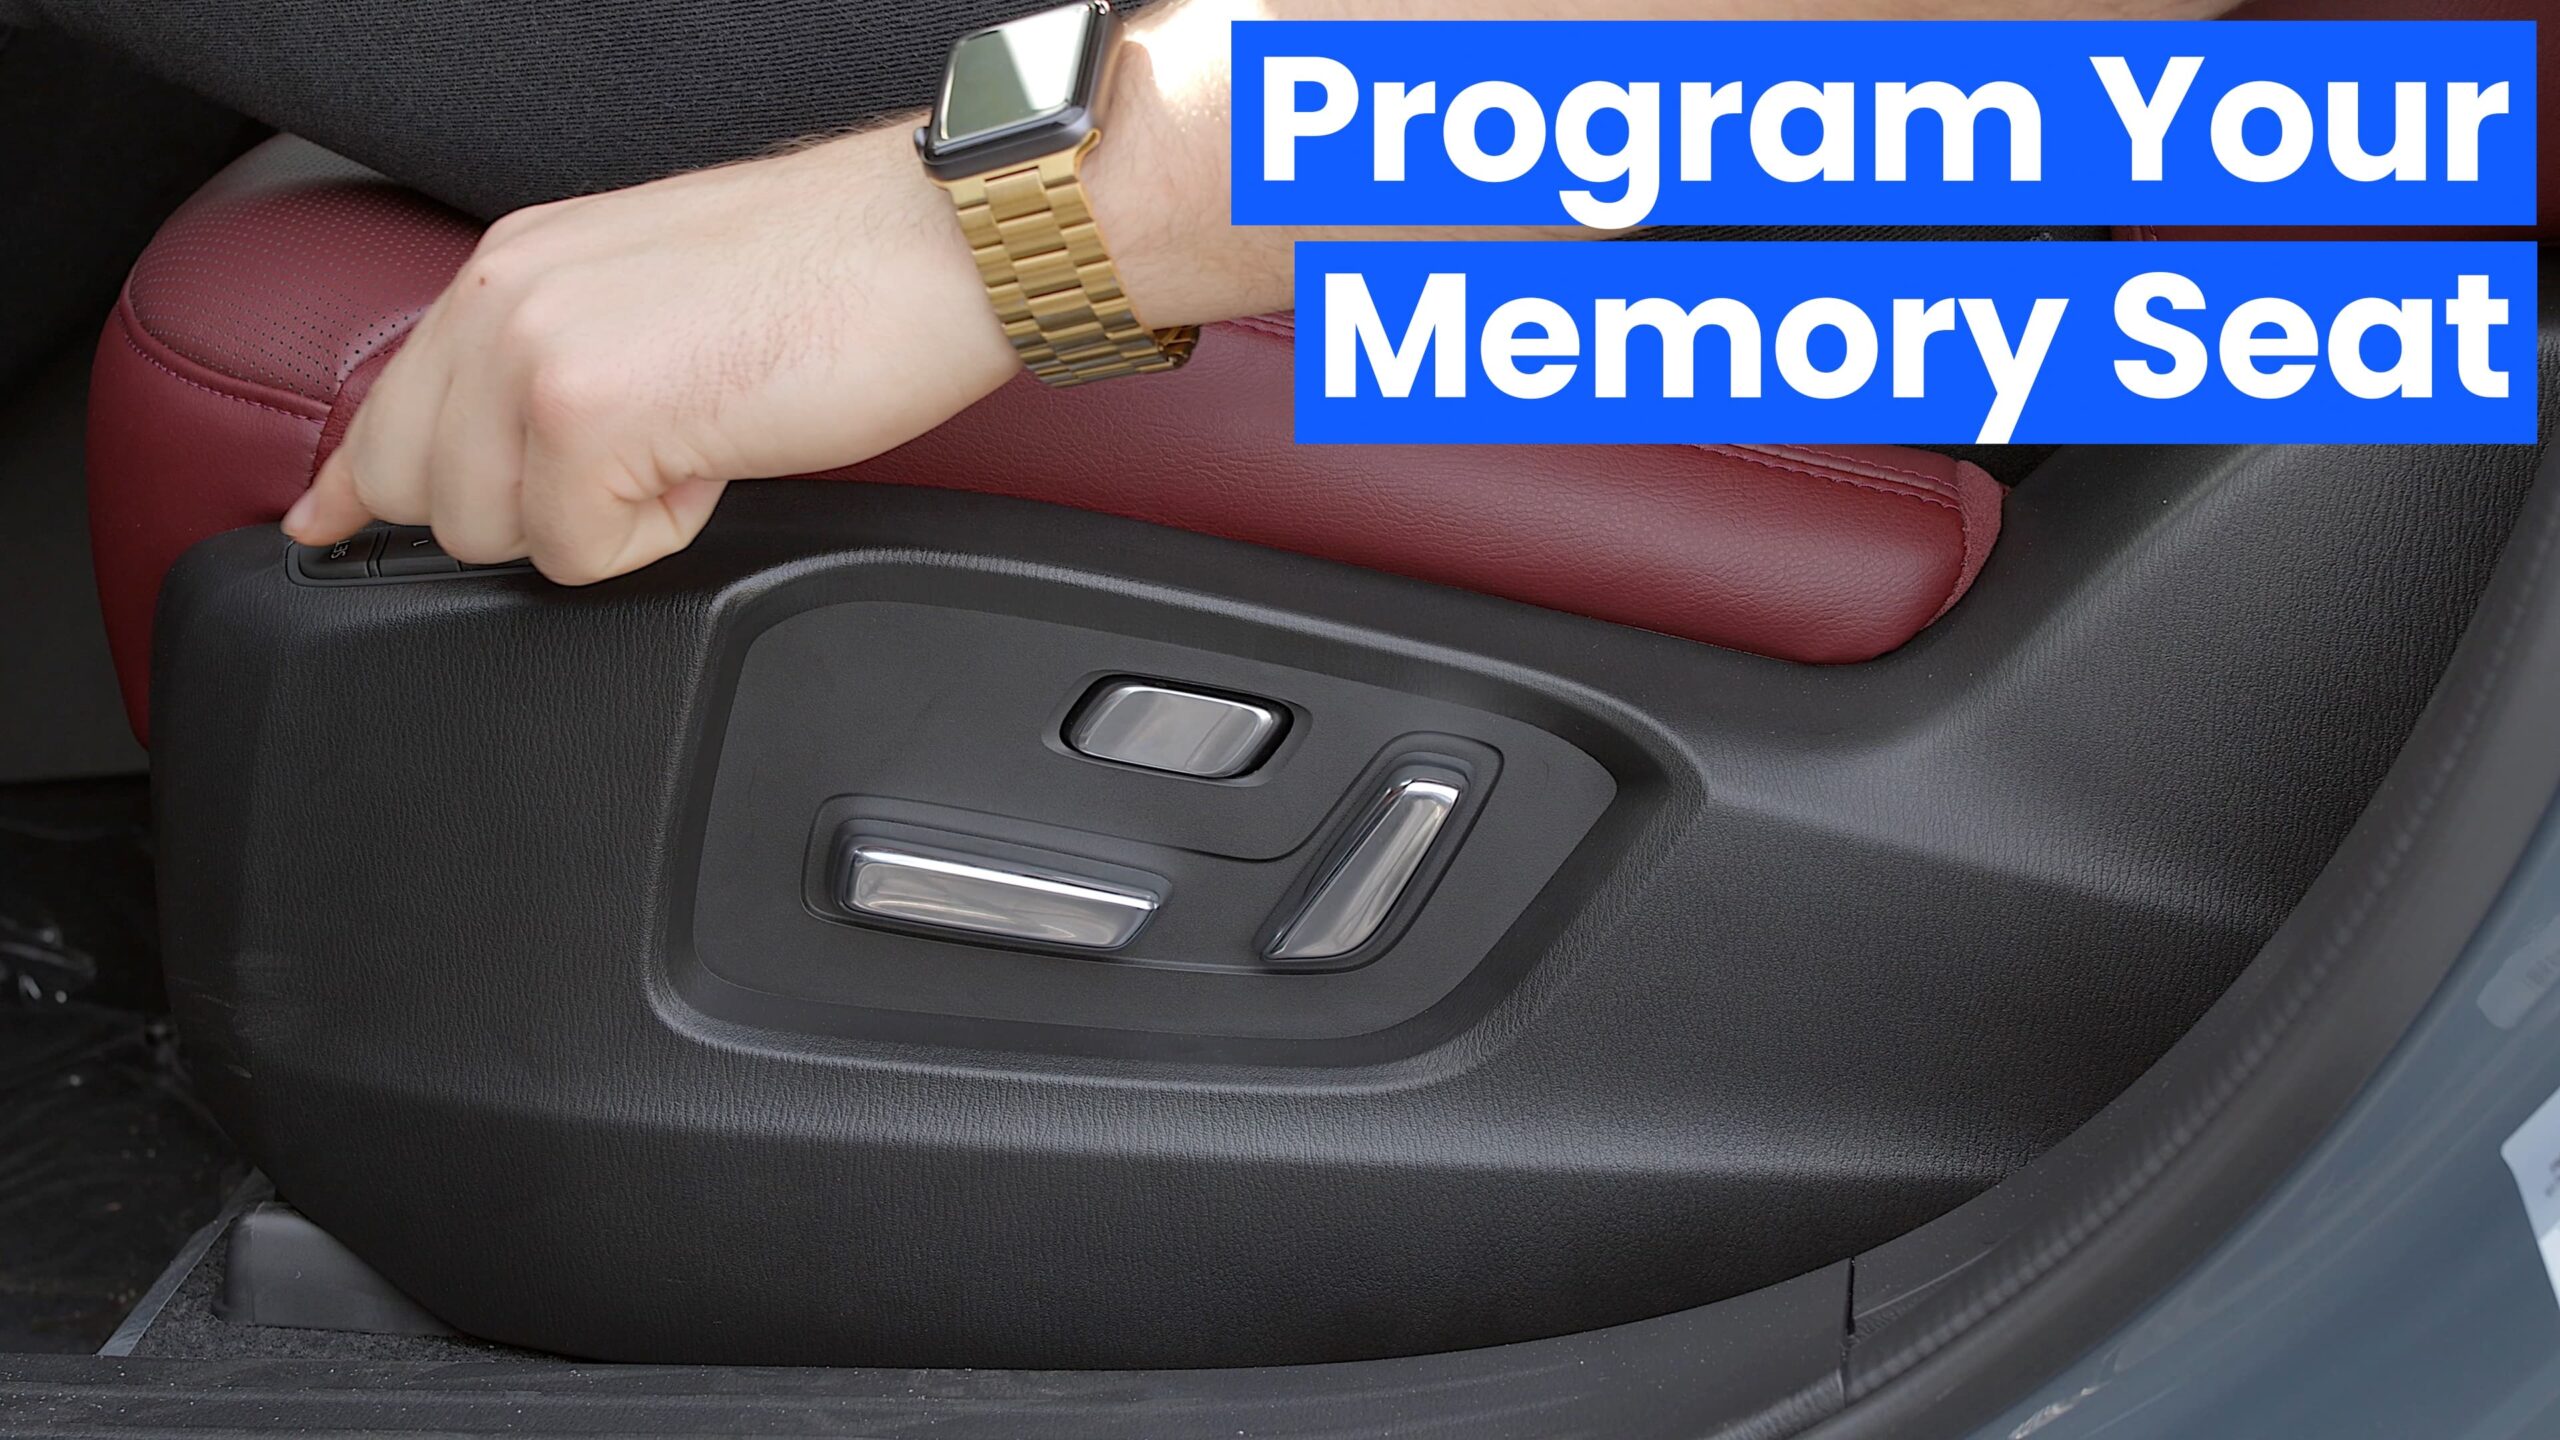 Program your memory seat